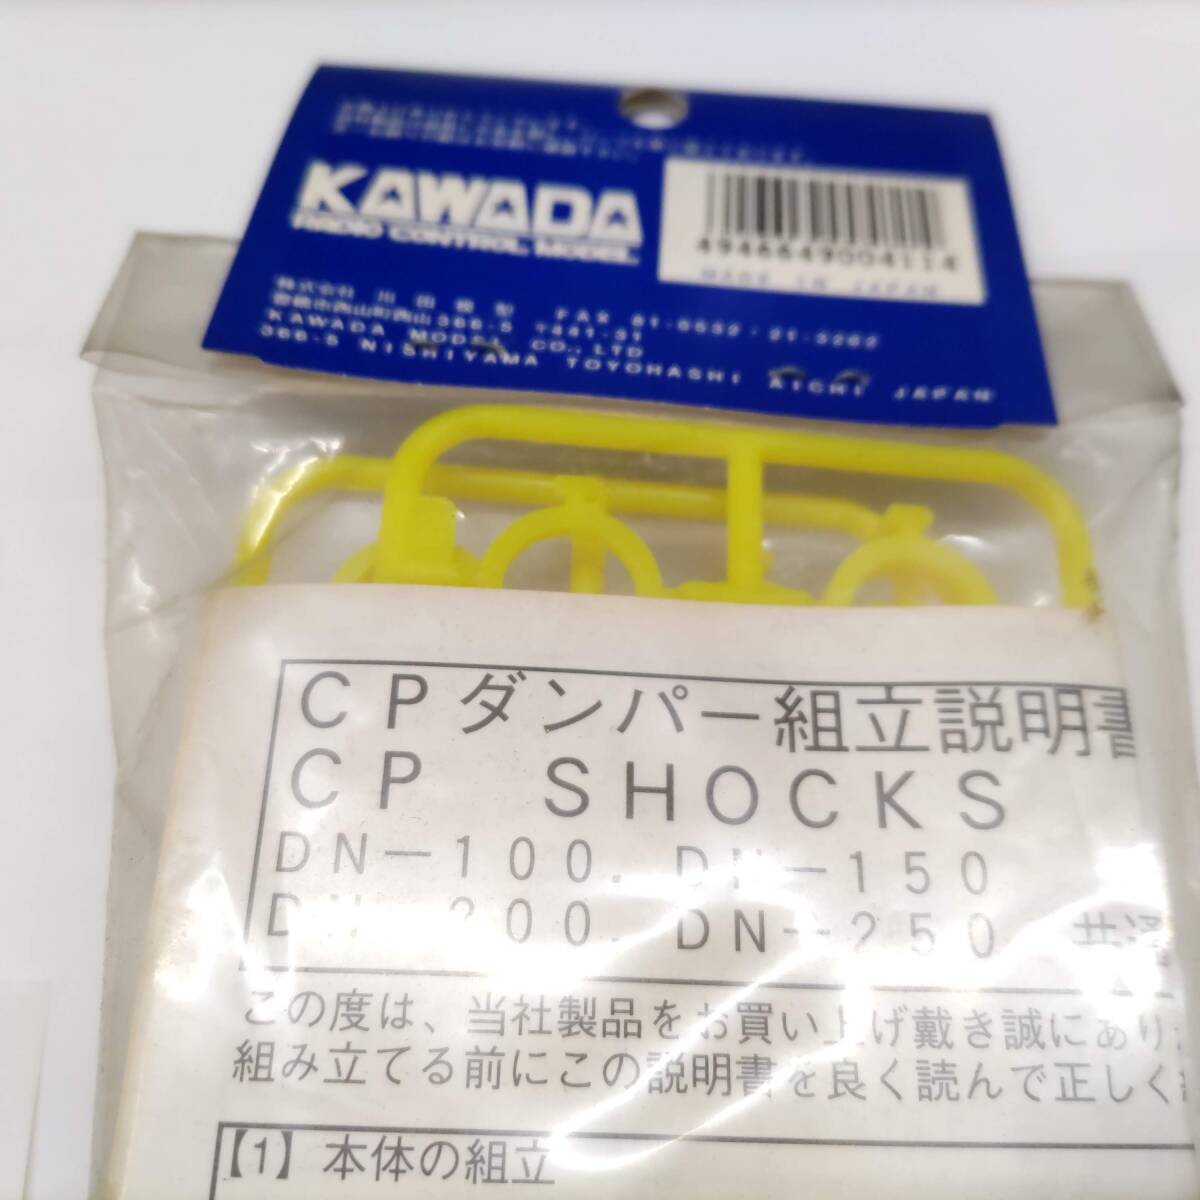 X047　KAWADA　DN250 ST=25mm CPダンパー L, L=84,90 CP OIL SHOCK, L　未開封 長期保管品_画像5